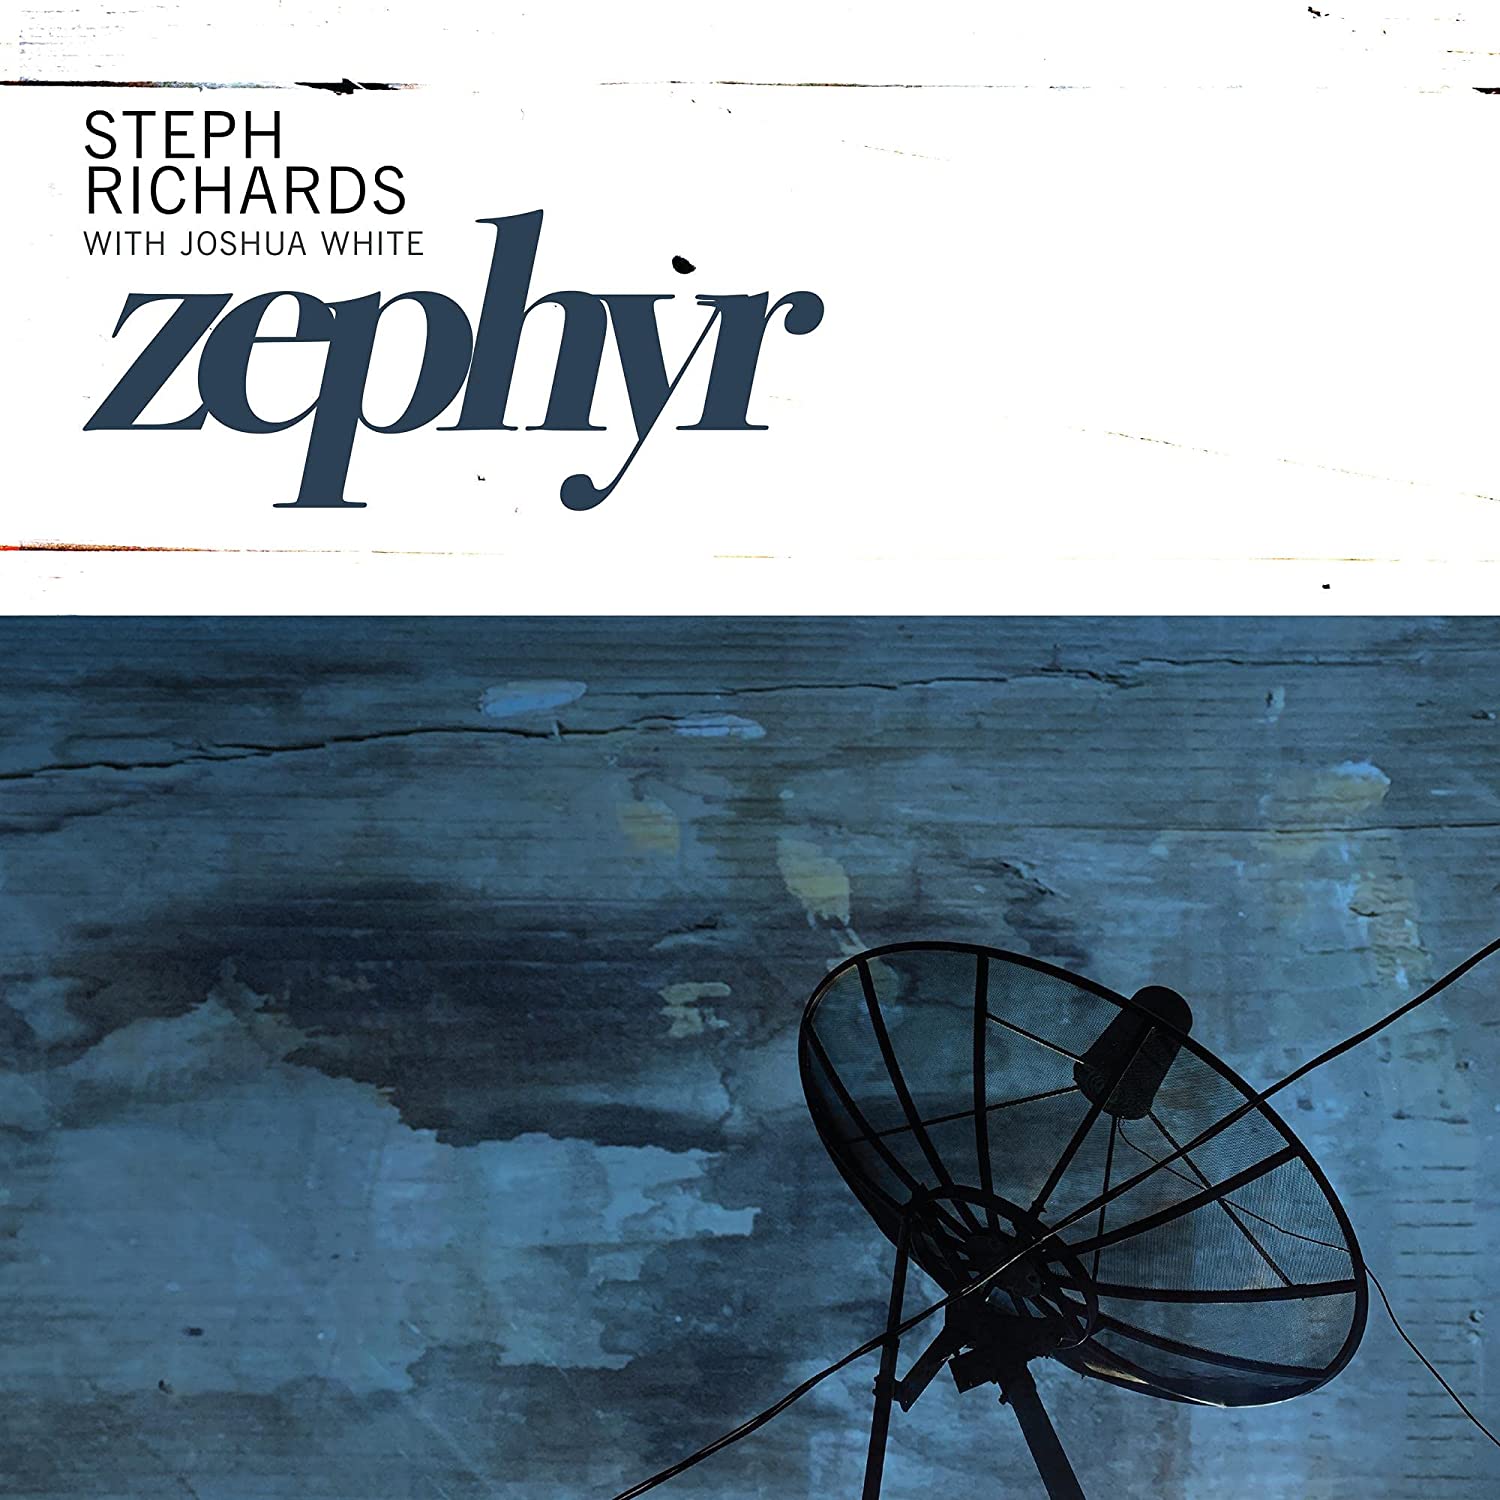 STEPHANIE RICHARDS - Steph Richards / Joshua White : Zephyr cover 